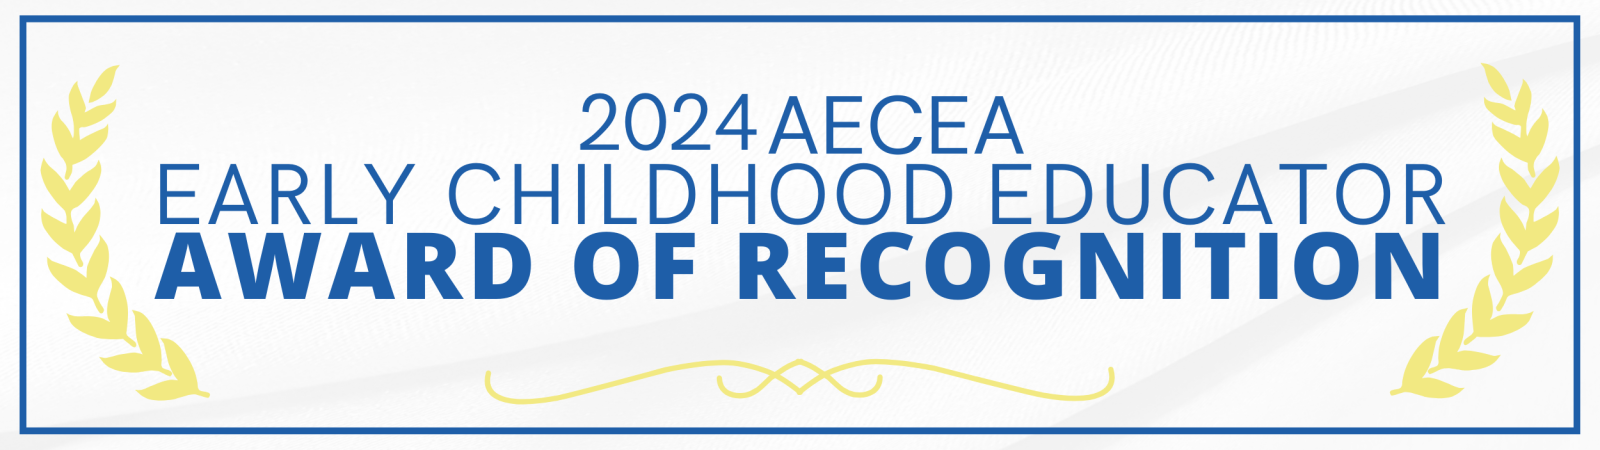 2024 AECEA ECE Award of Recognition Cover Photo